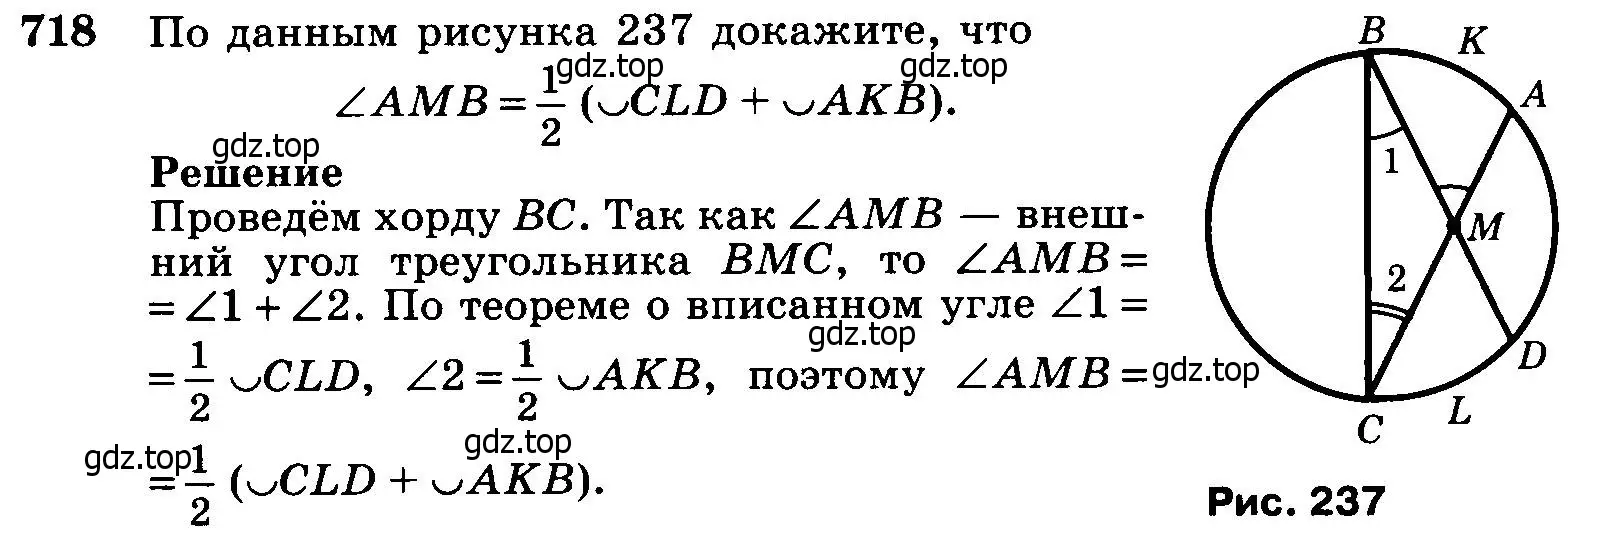 Условие номер 718 (страница 186) гдз по геометрии 7-9 класс Атанасян, Бутузов, учебник